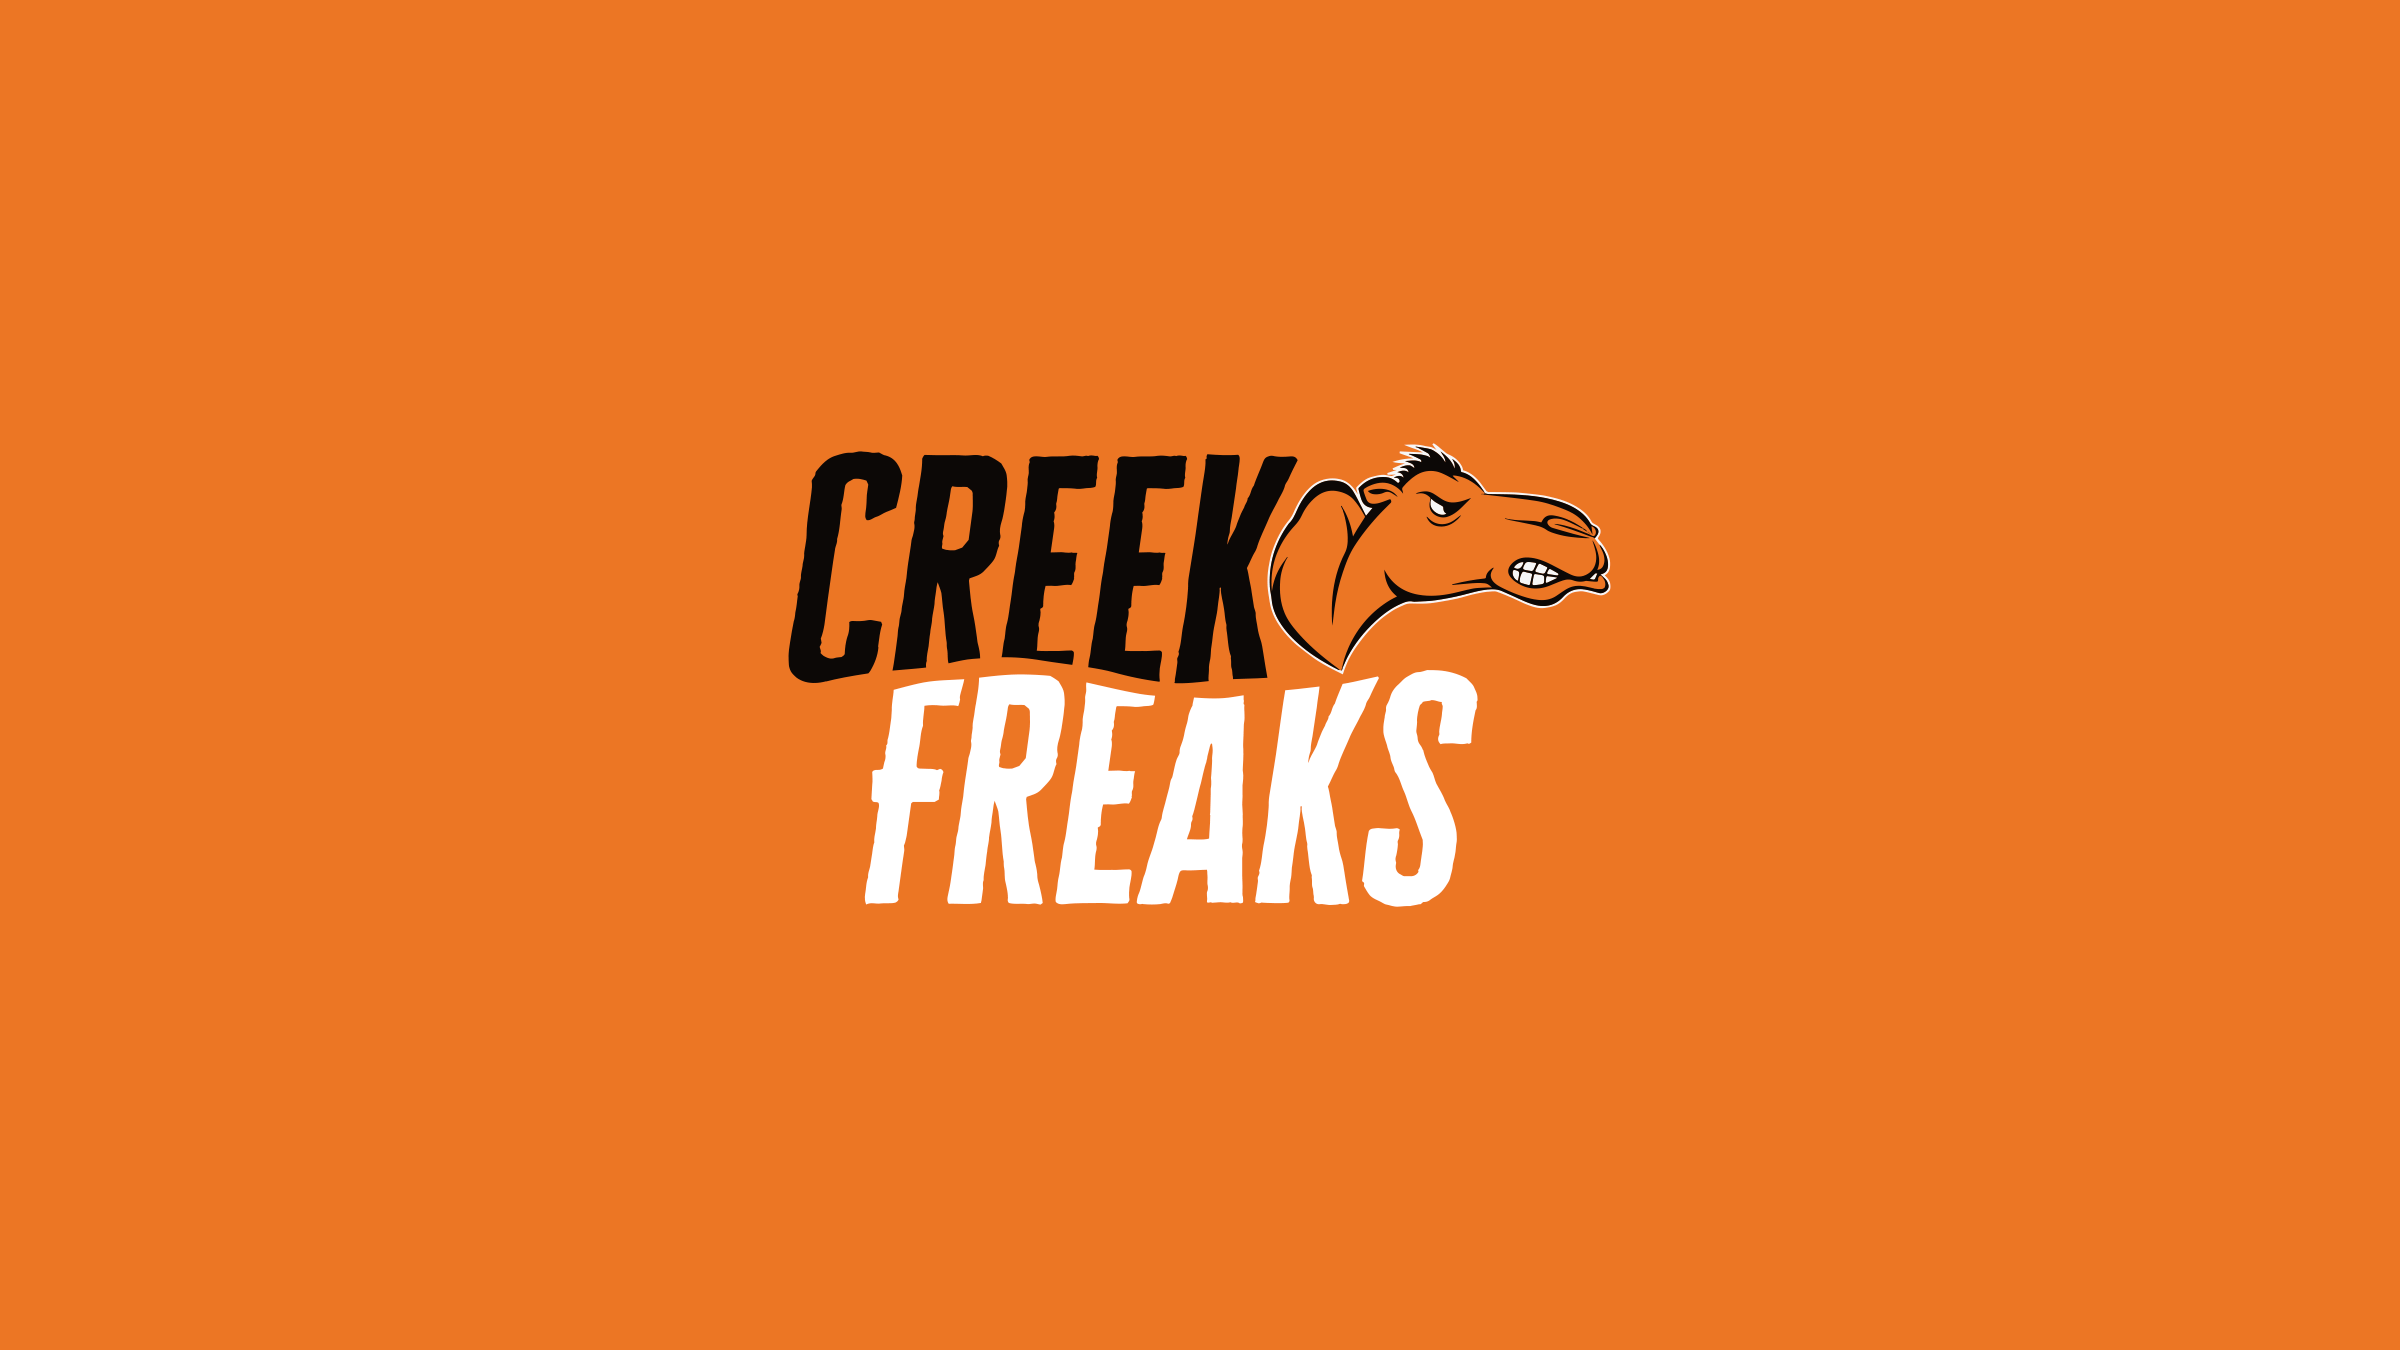 McLean-Roberts-Logo-Design-Campbell-Athletics-Creek-Freaks.png